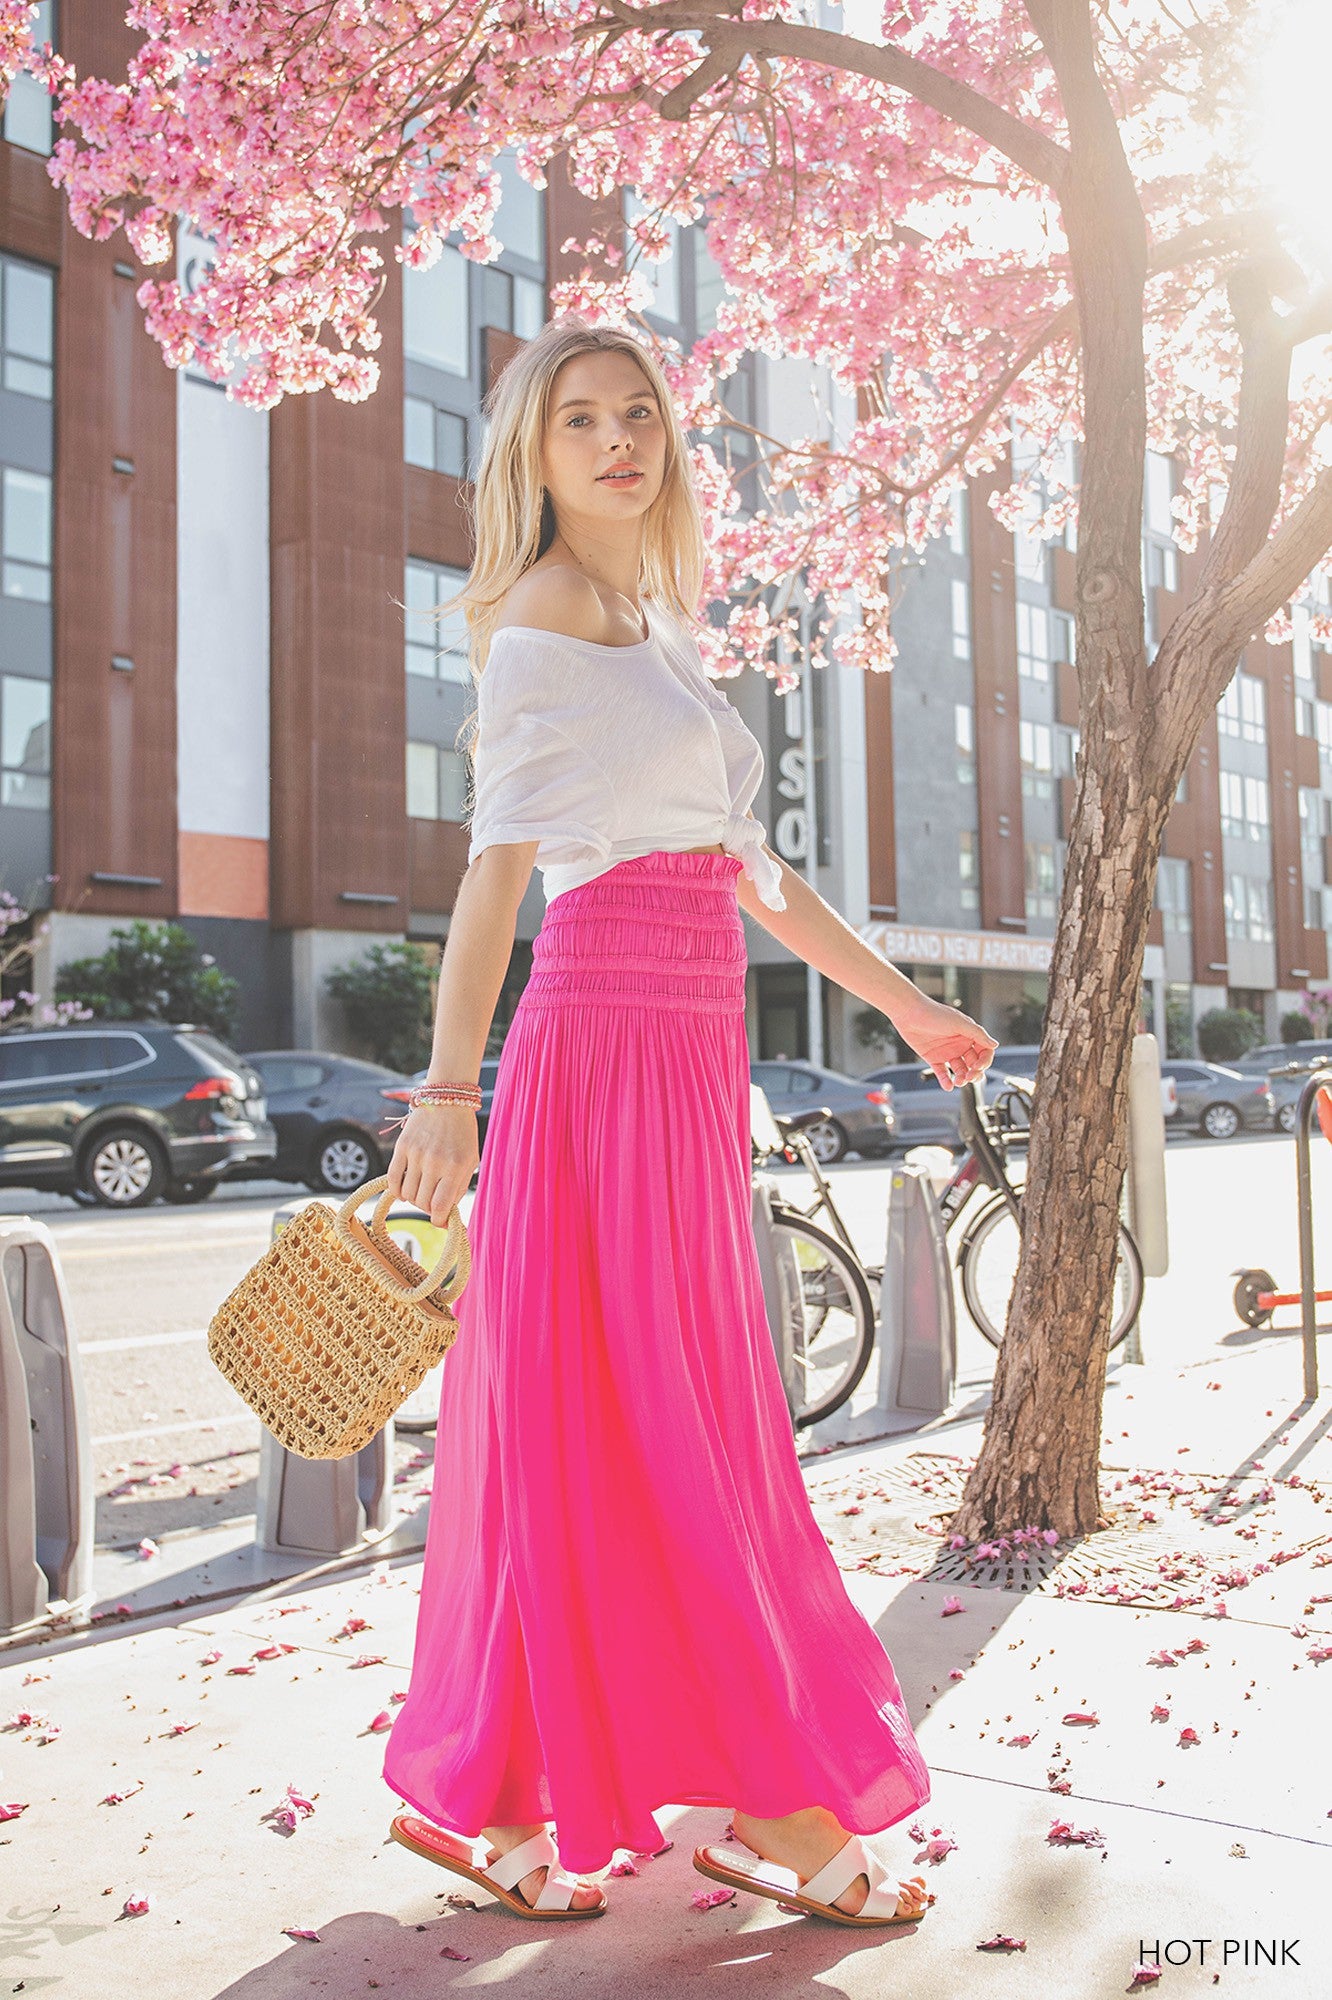 Stunning Maxi Skirt/Dress - 3 Colors